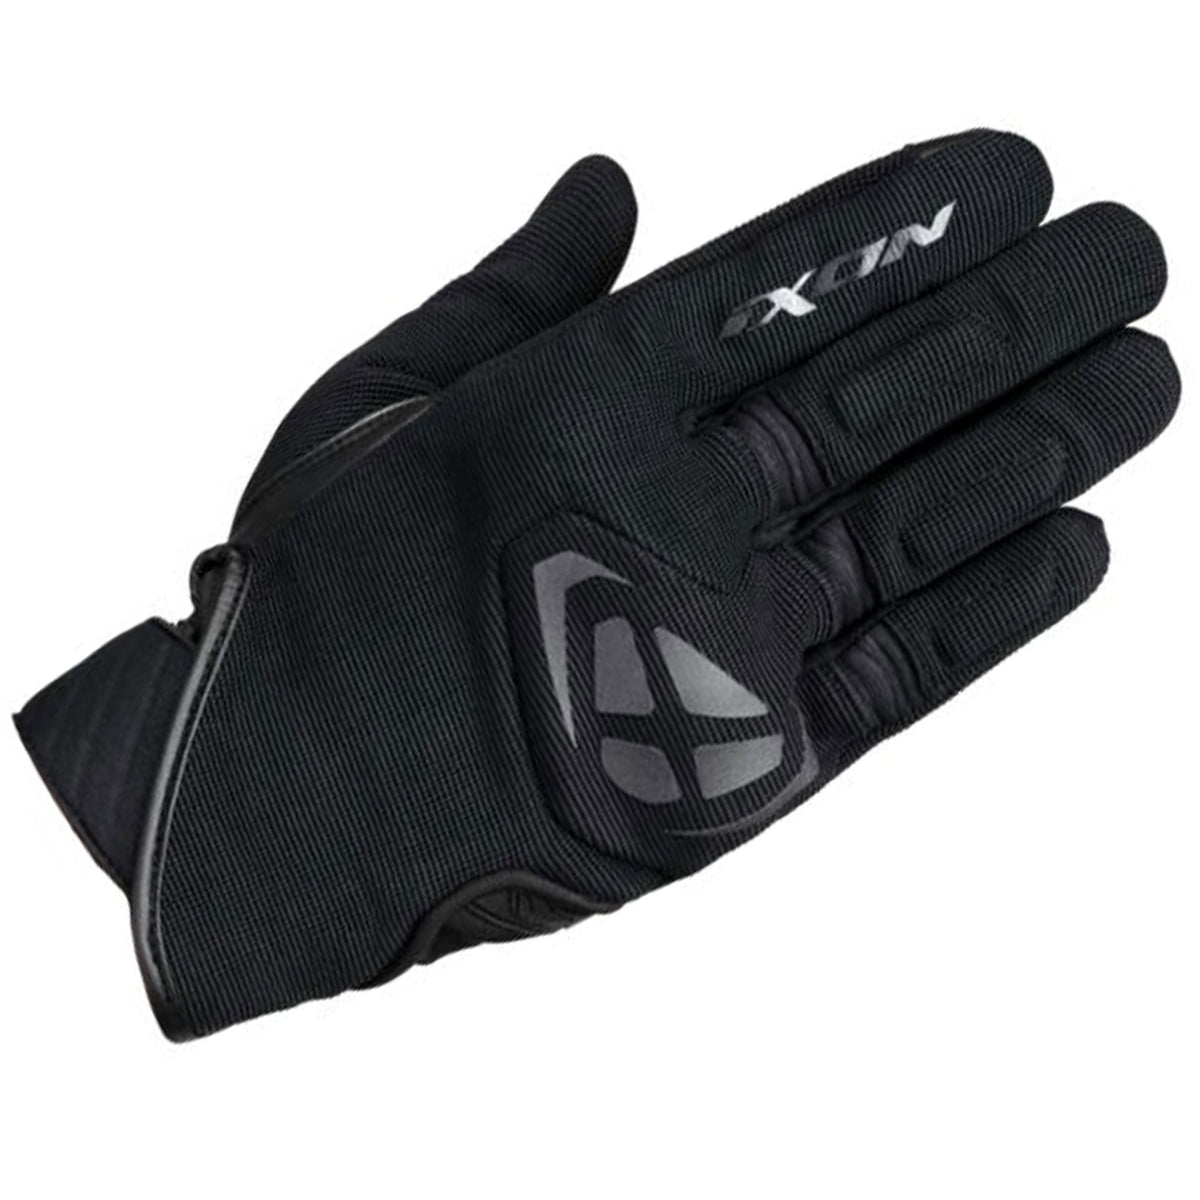 Ixon Mig Black Gloves